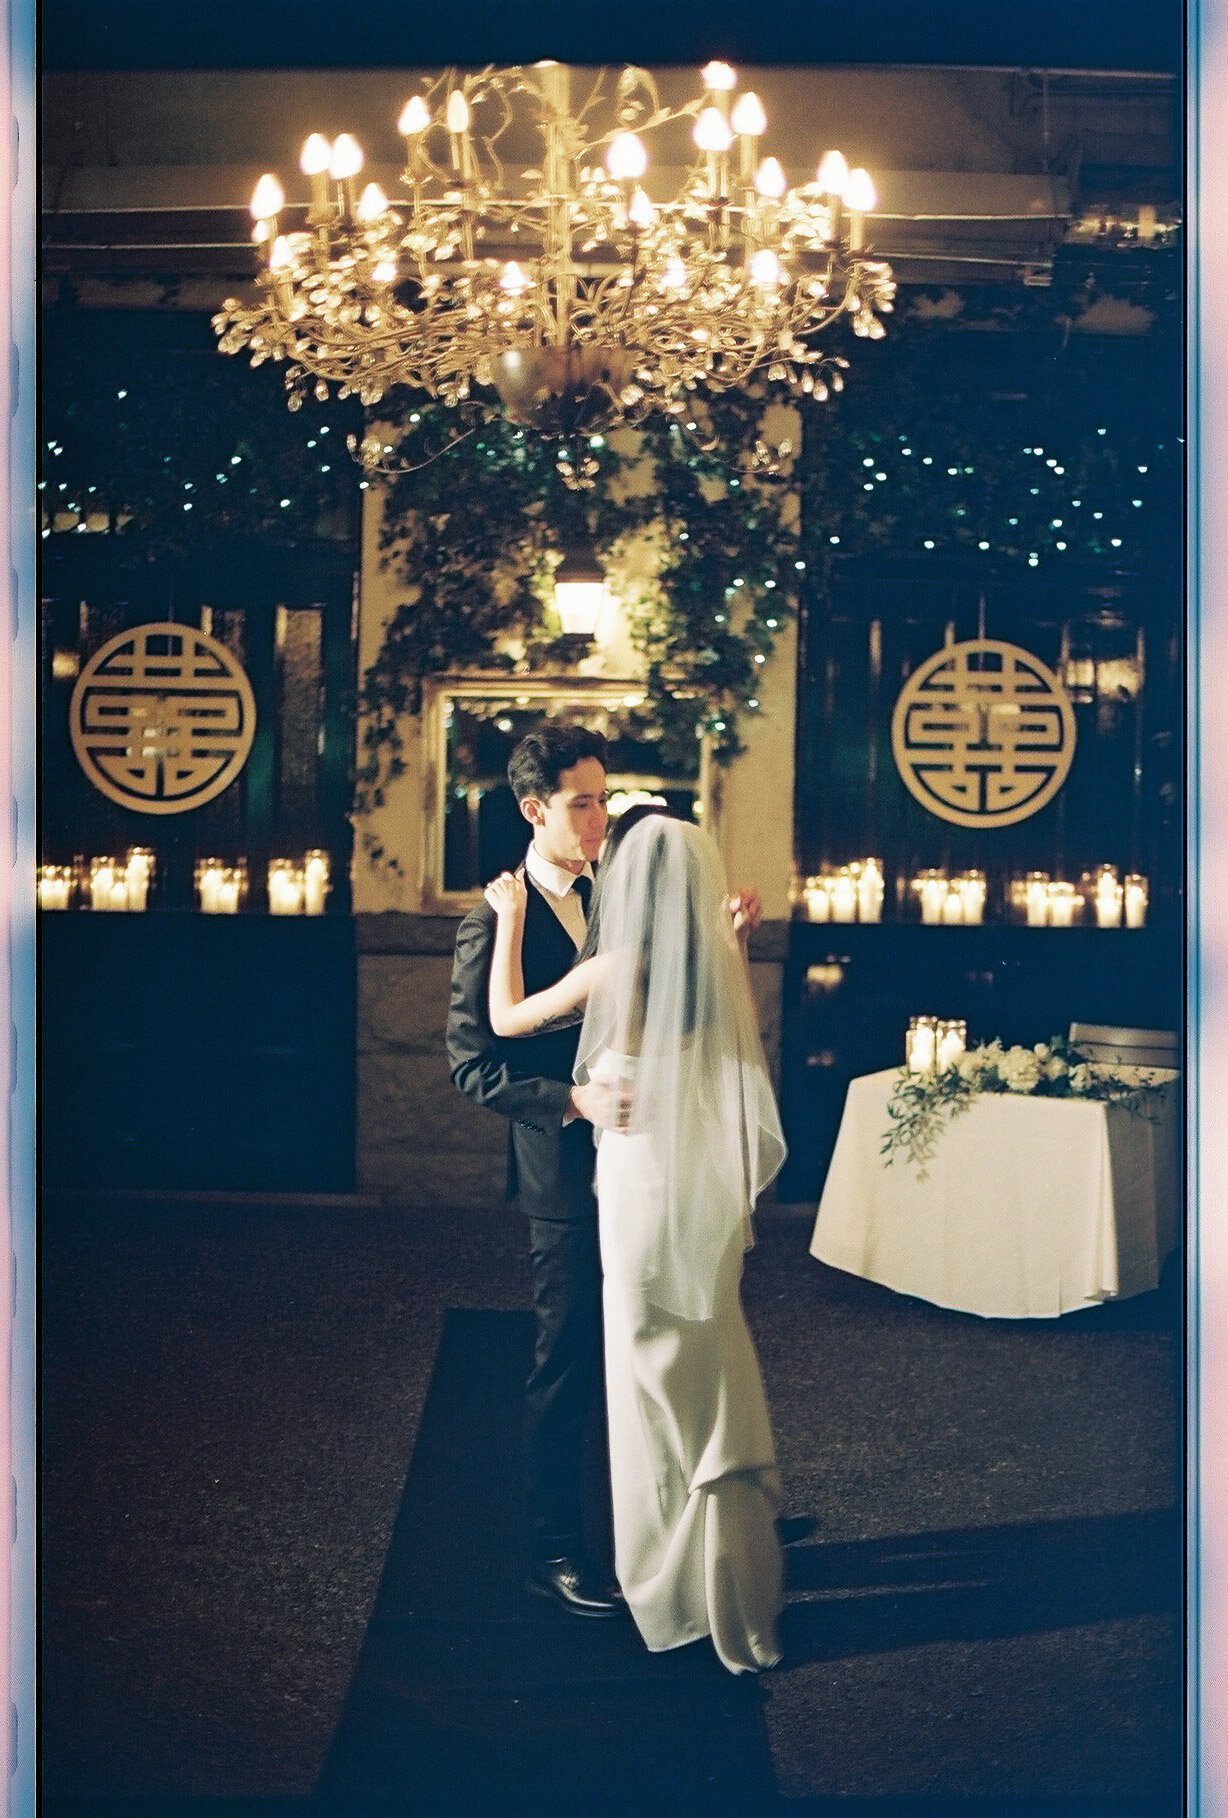 anne and jon wedding 35mm film_danika camba photograpy_02192023-29